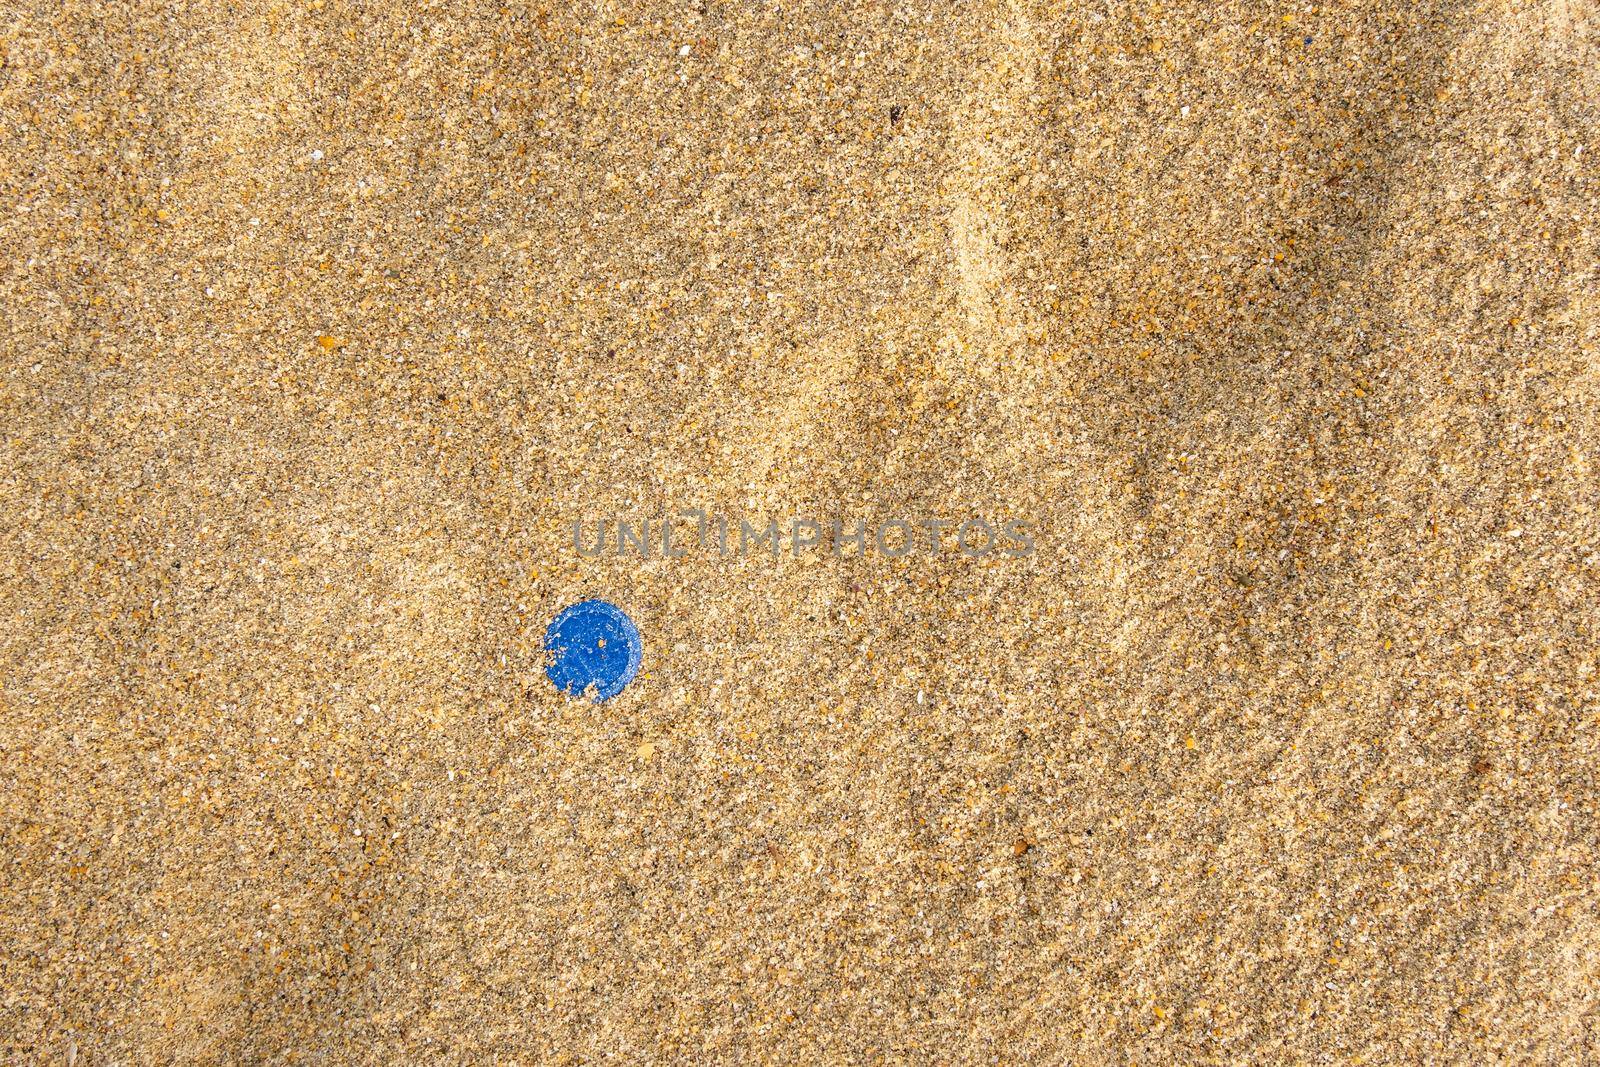 Blue water bottle cap in beach sand, plastic pollution concept